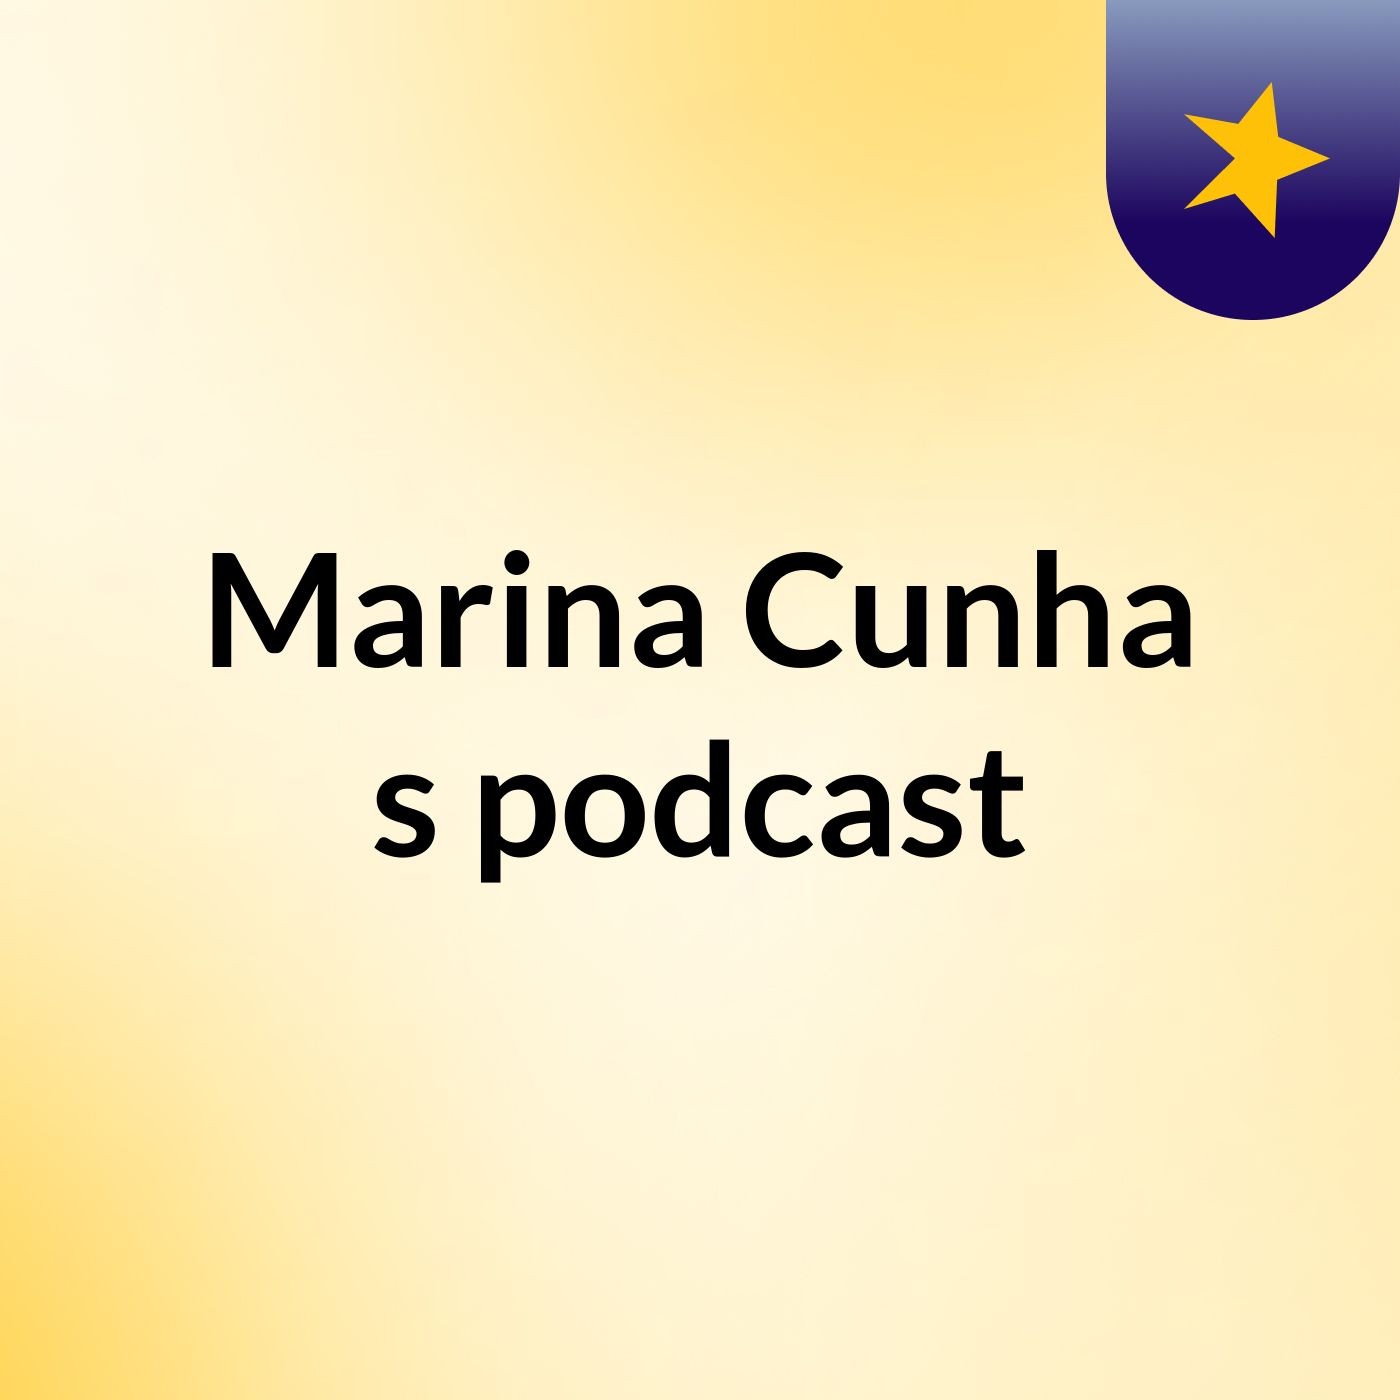 Marina Cunha's podcast